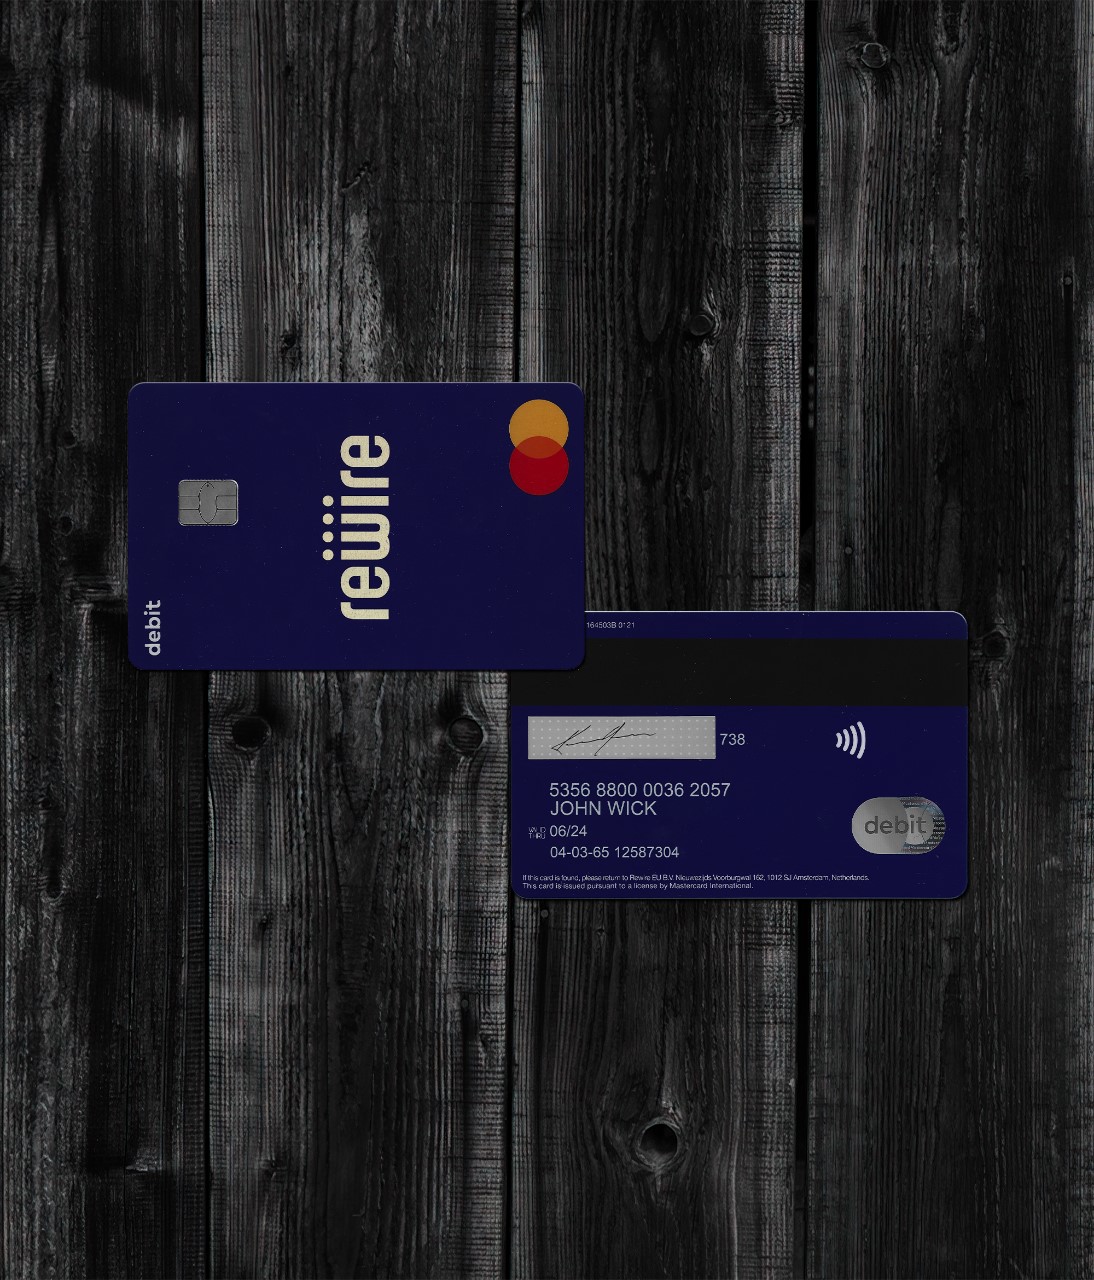  Credit Card-1